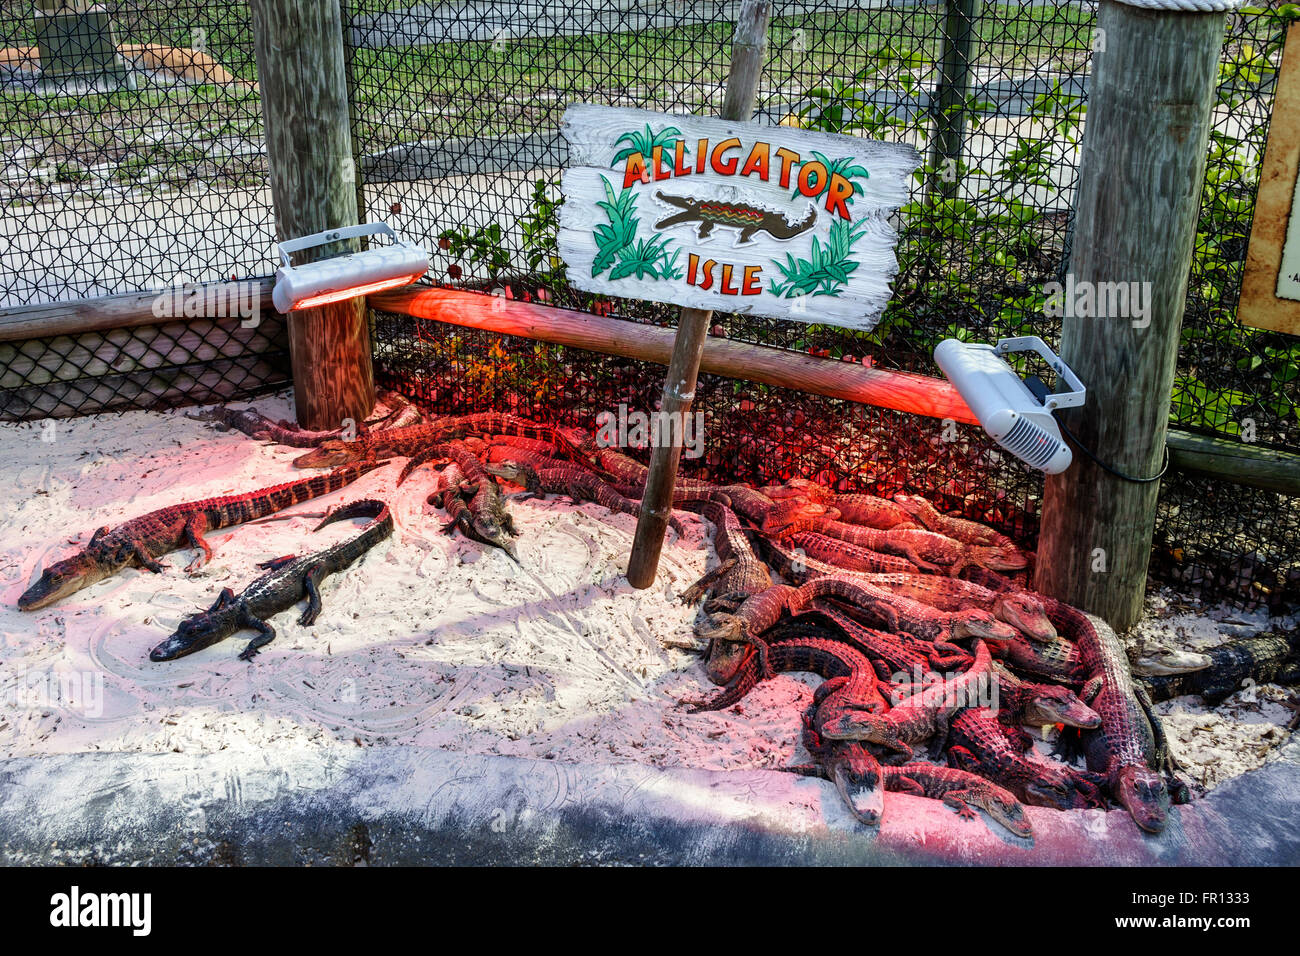 Florida New Port Richey,baby babies alligators,gators,heat lamp,Congo River Miniature Golf Course,FL160211042 Stock Photo